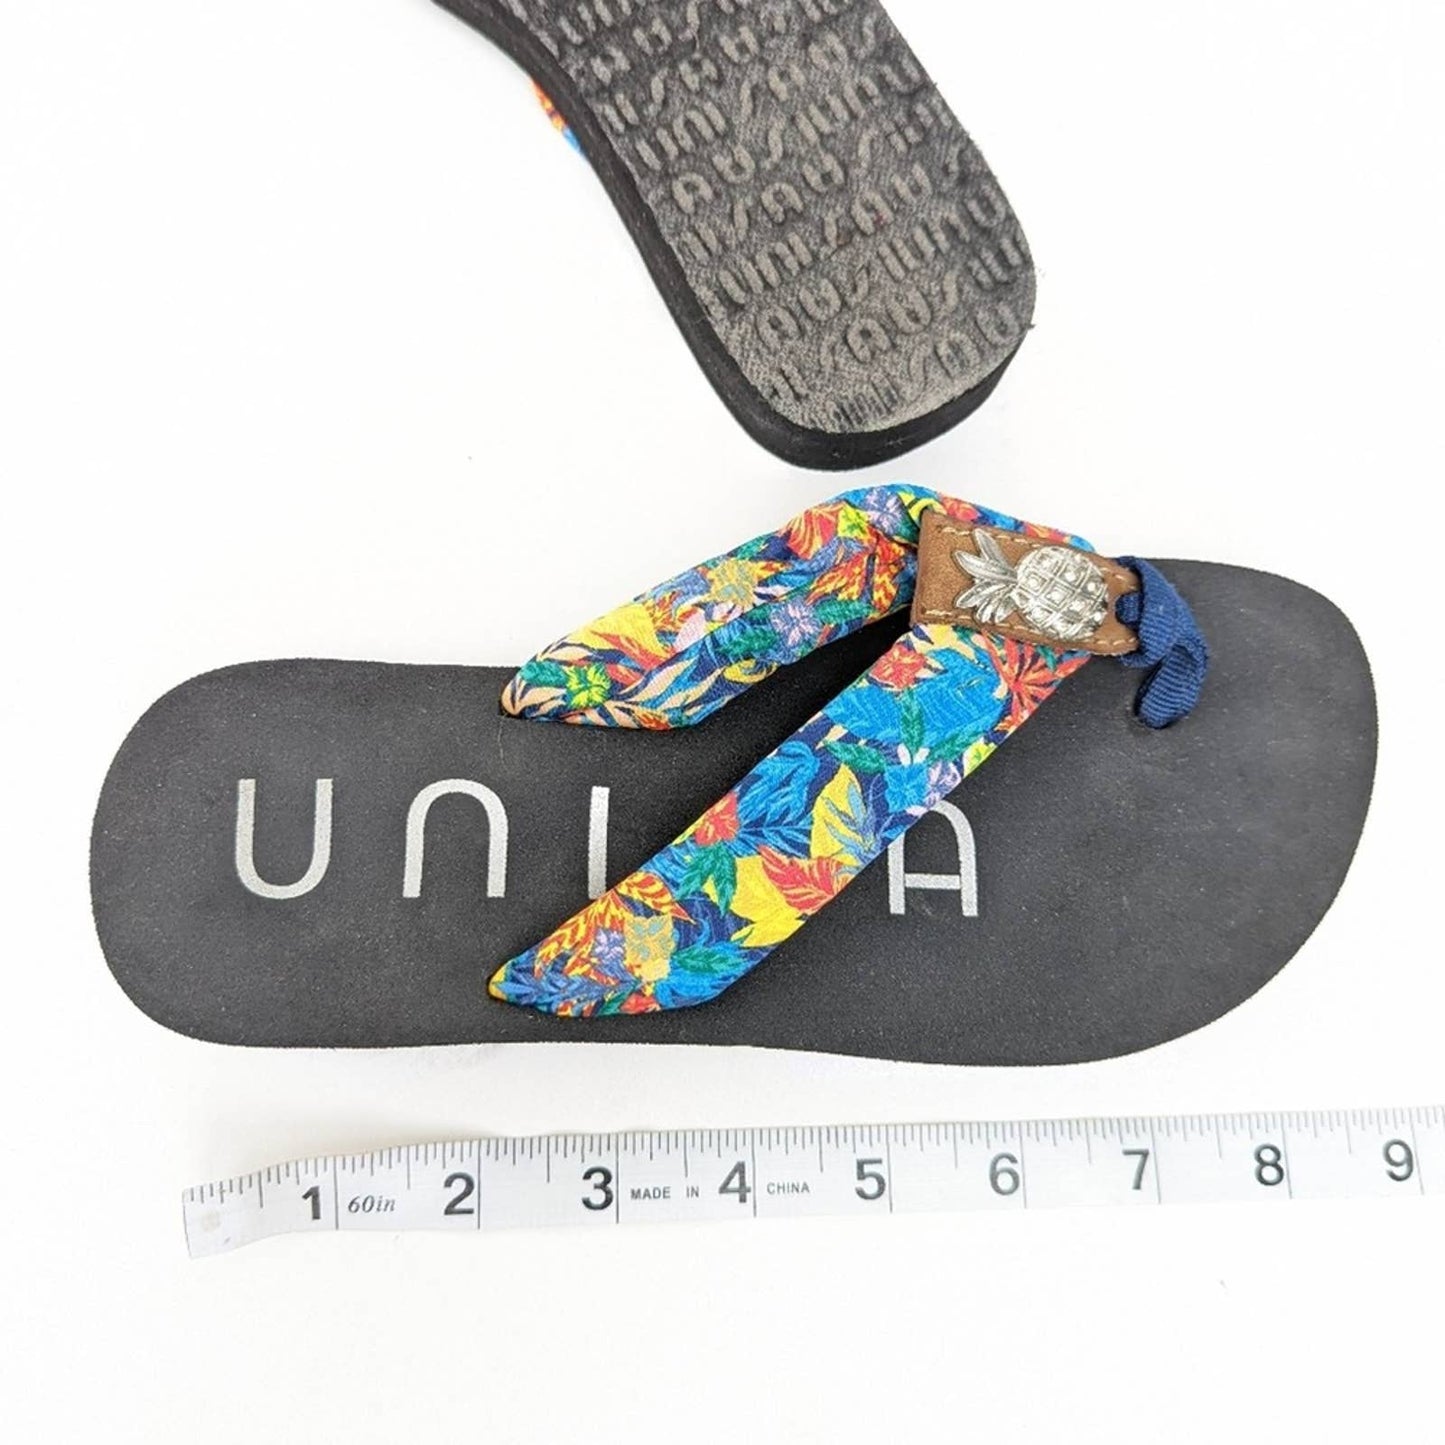 Unisa Fiava Flip Flop Sandals - 5